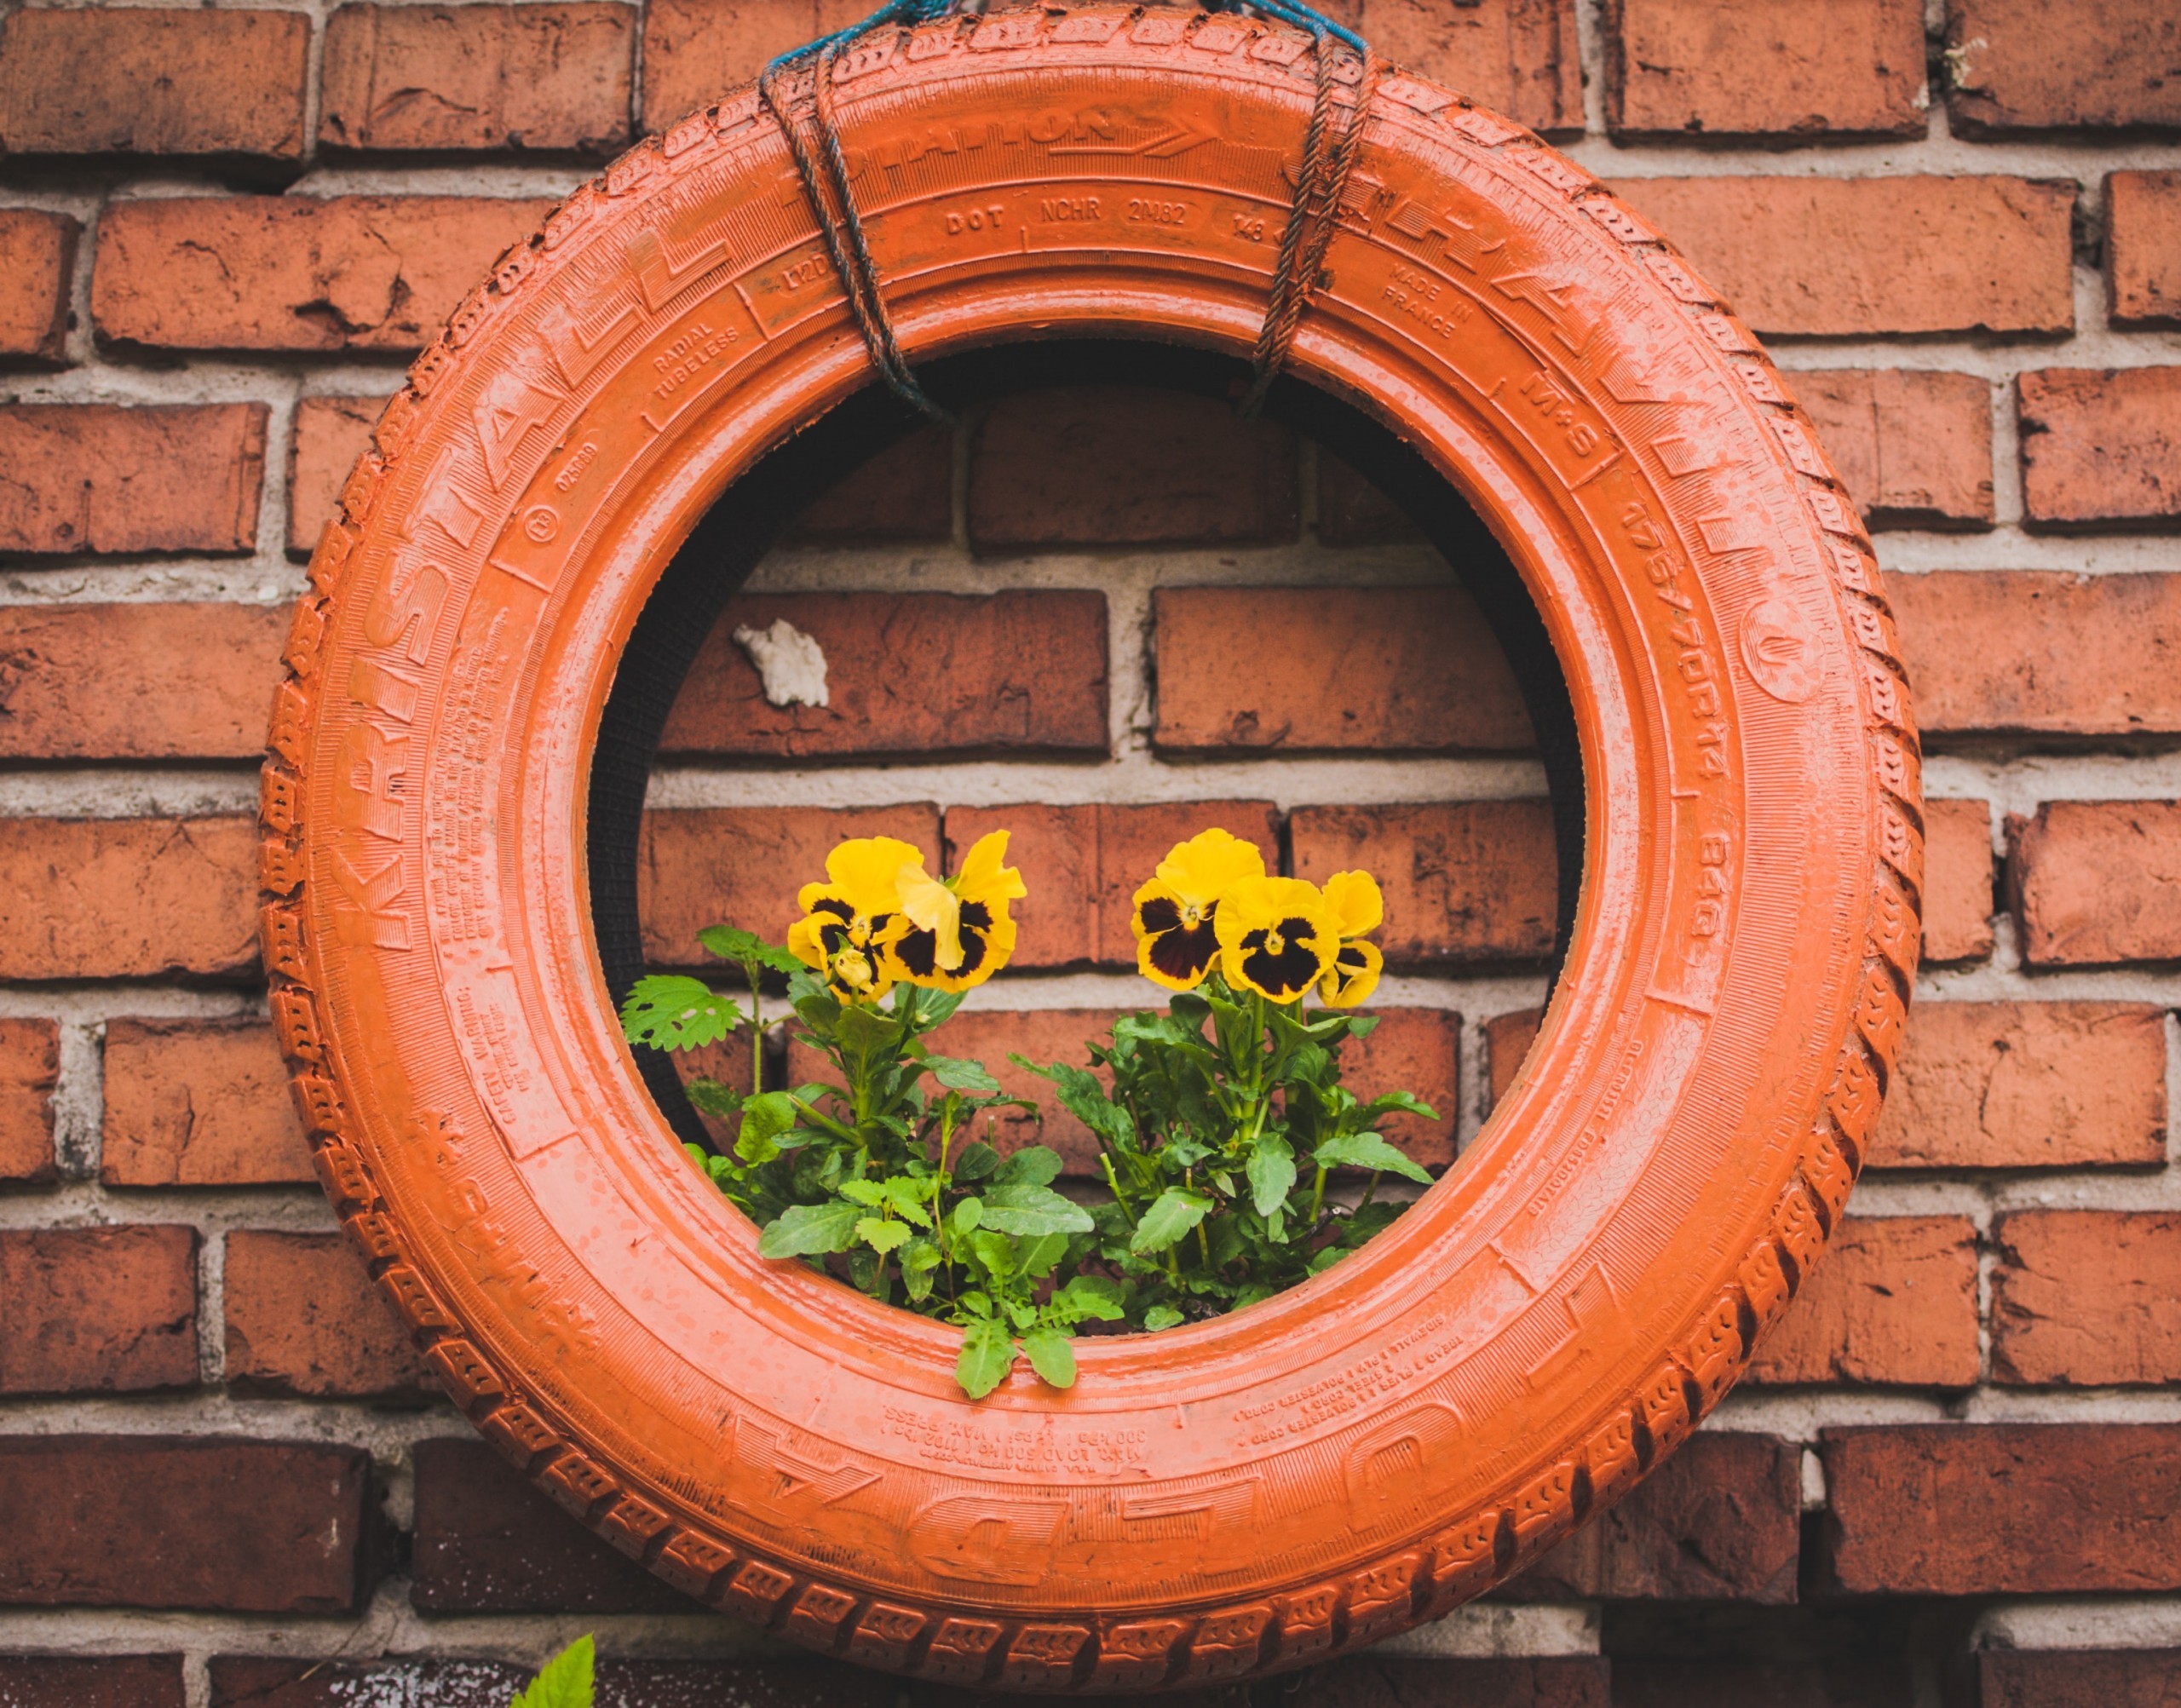 A rubber tire repurposed as a plant pot